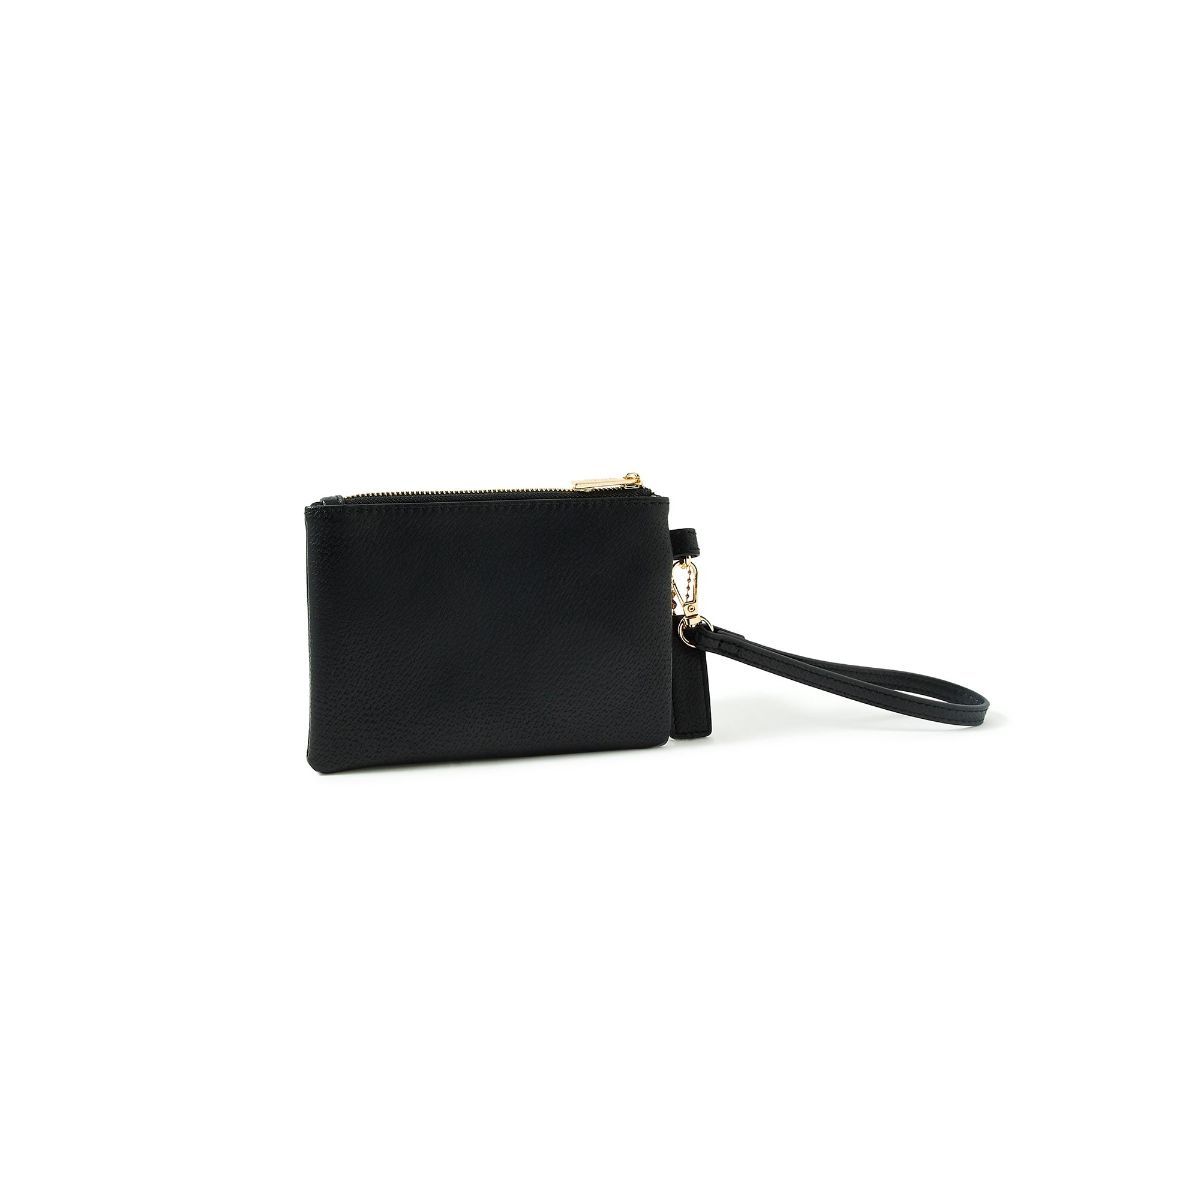 Buy Befen Women Genuine Leather Clutch Wallet, Smartphone Wristlet Purse -  Black at Amazon.in